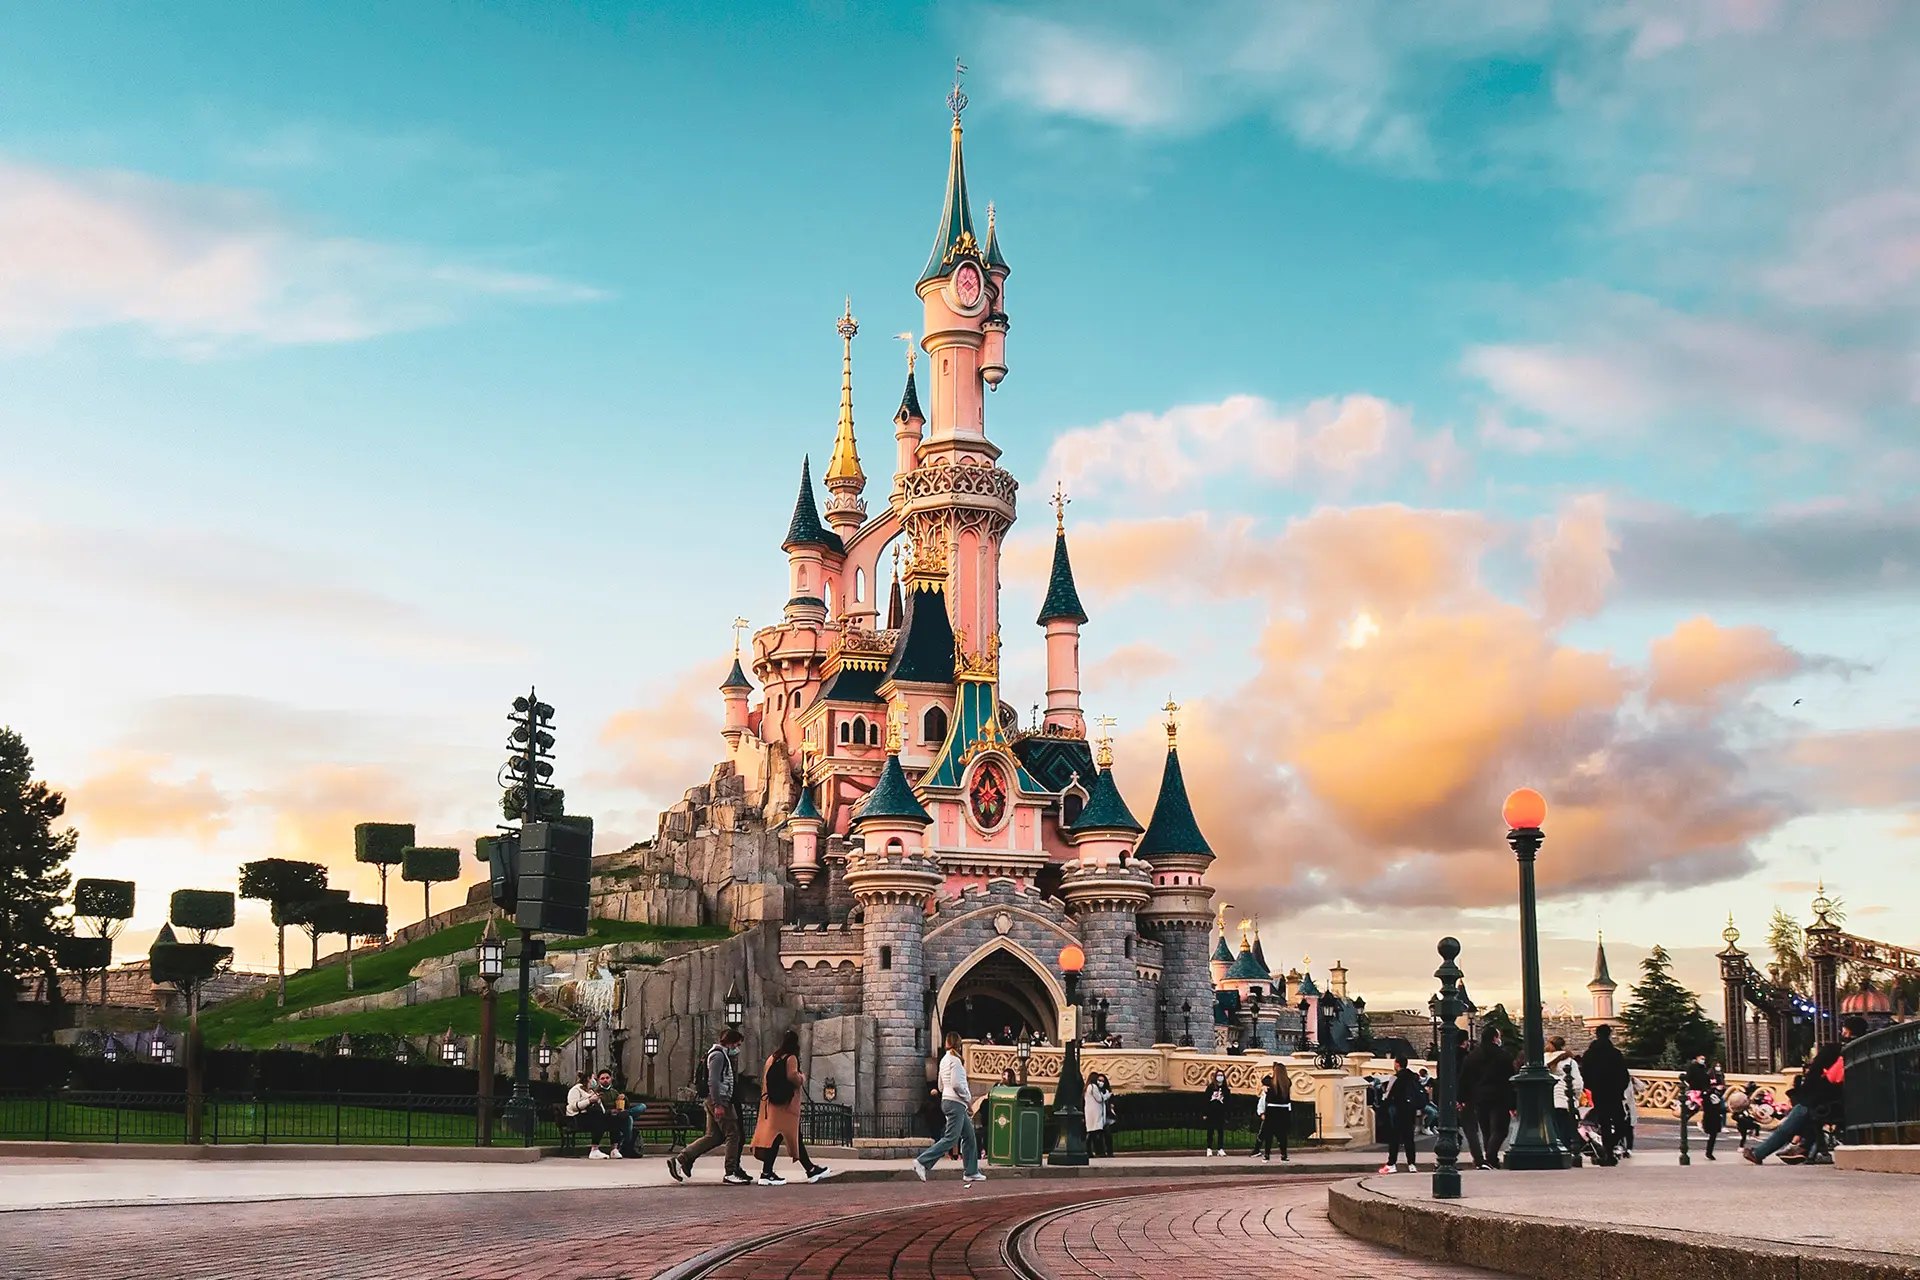 Cache Oreilles Princesses Disneyland Paris Disney rose hiver